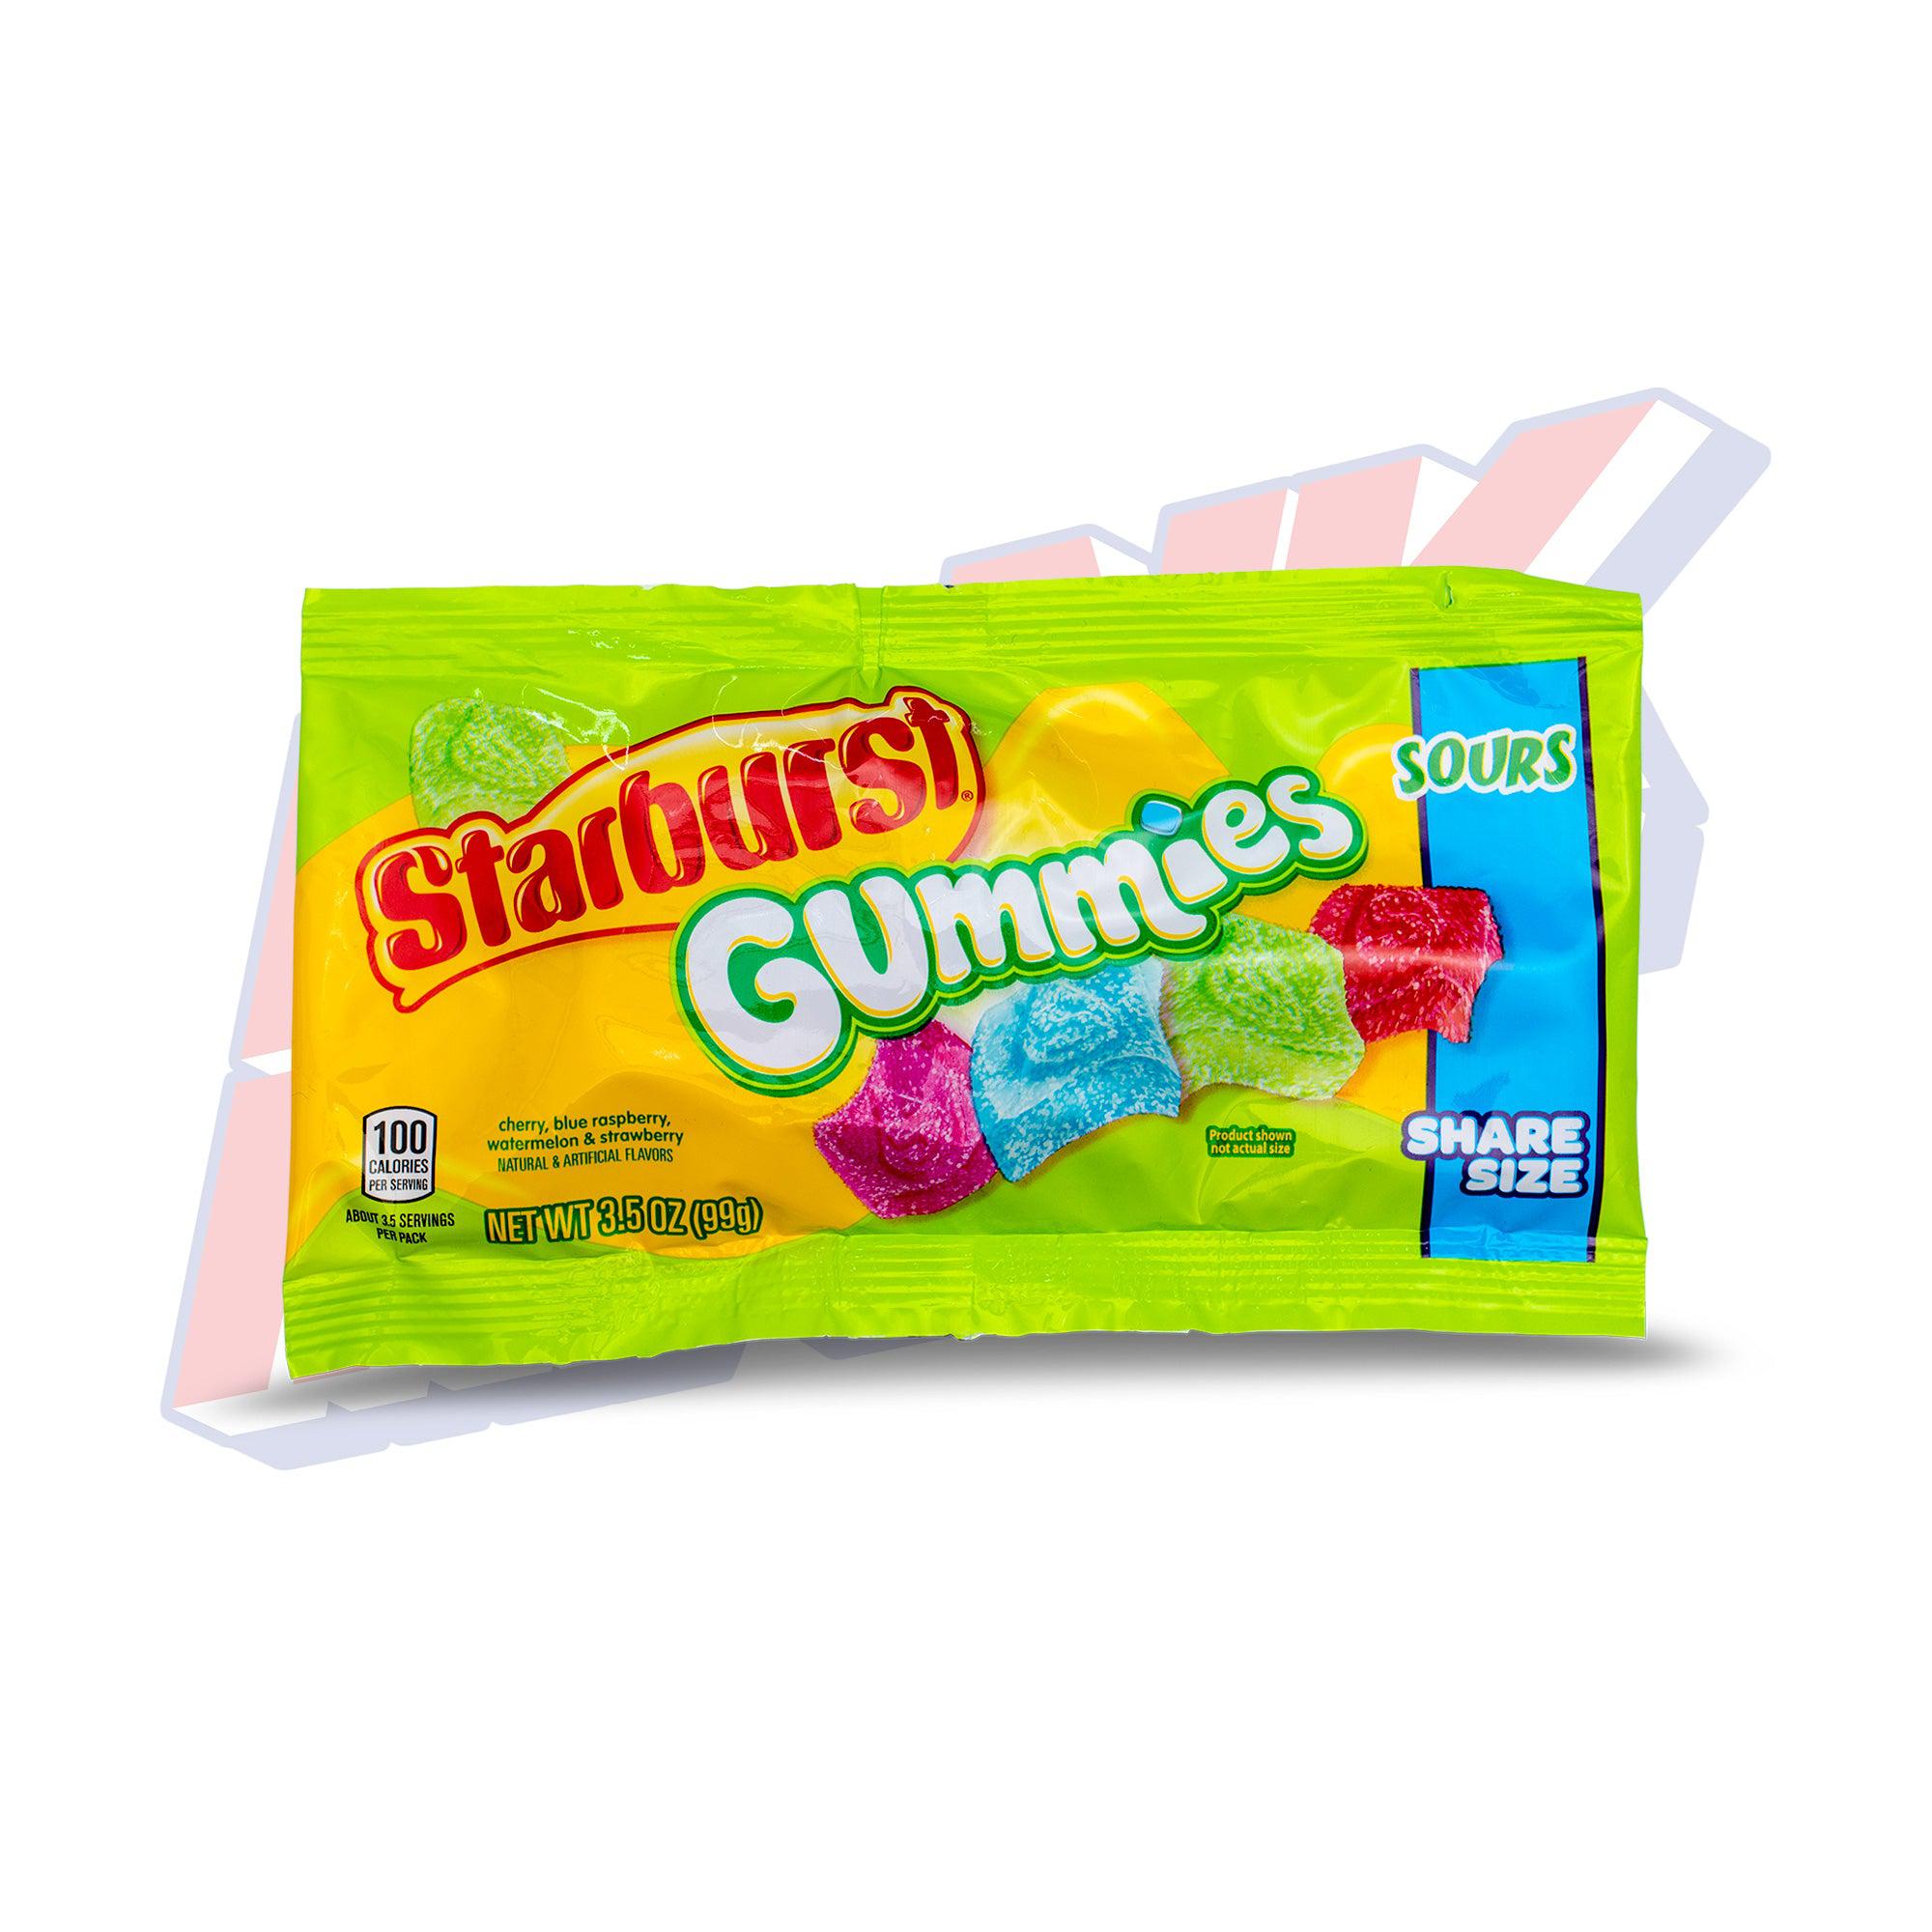 Starburst Gummies Sours - 3.5oz